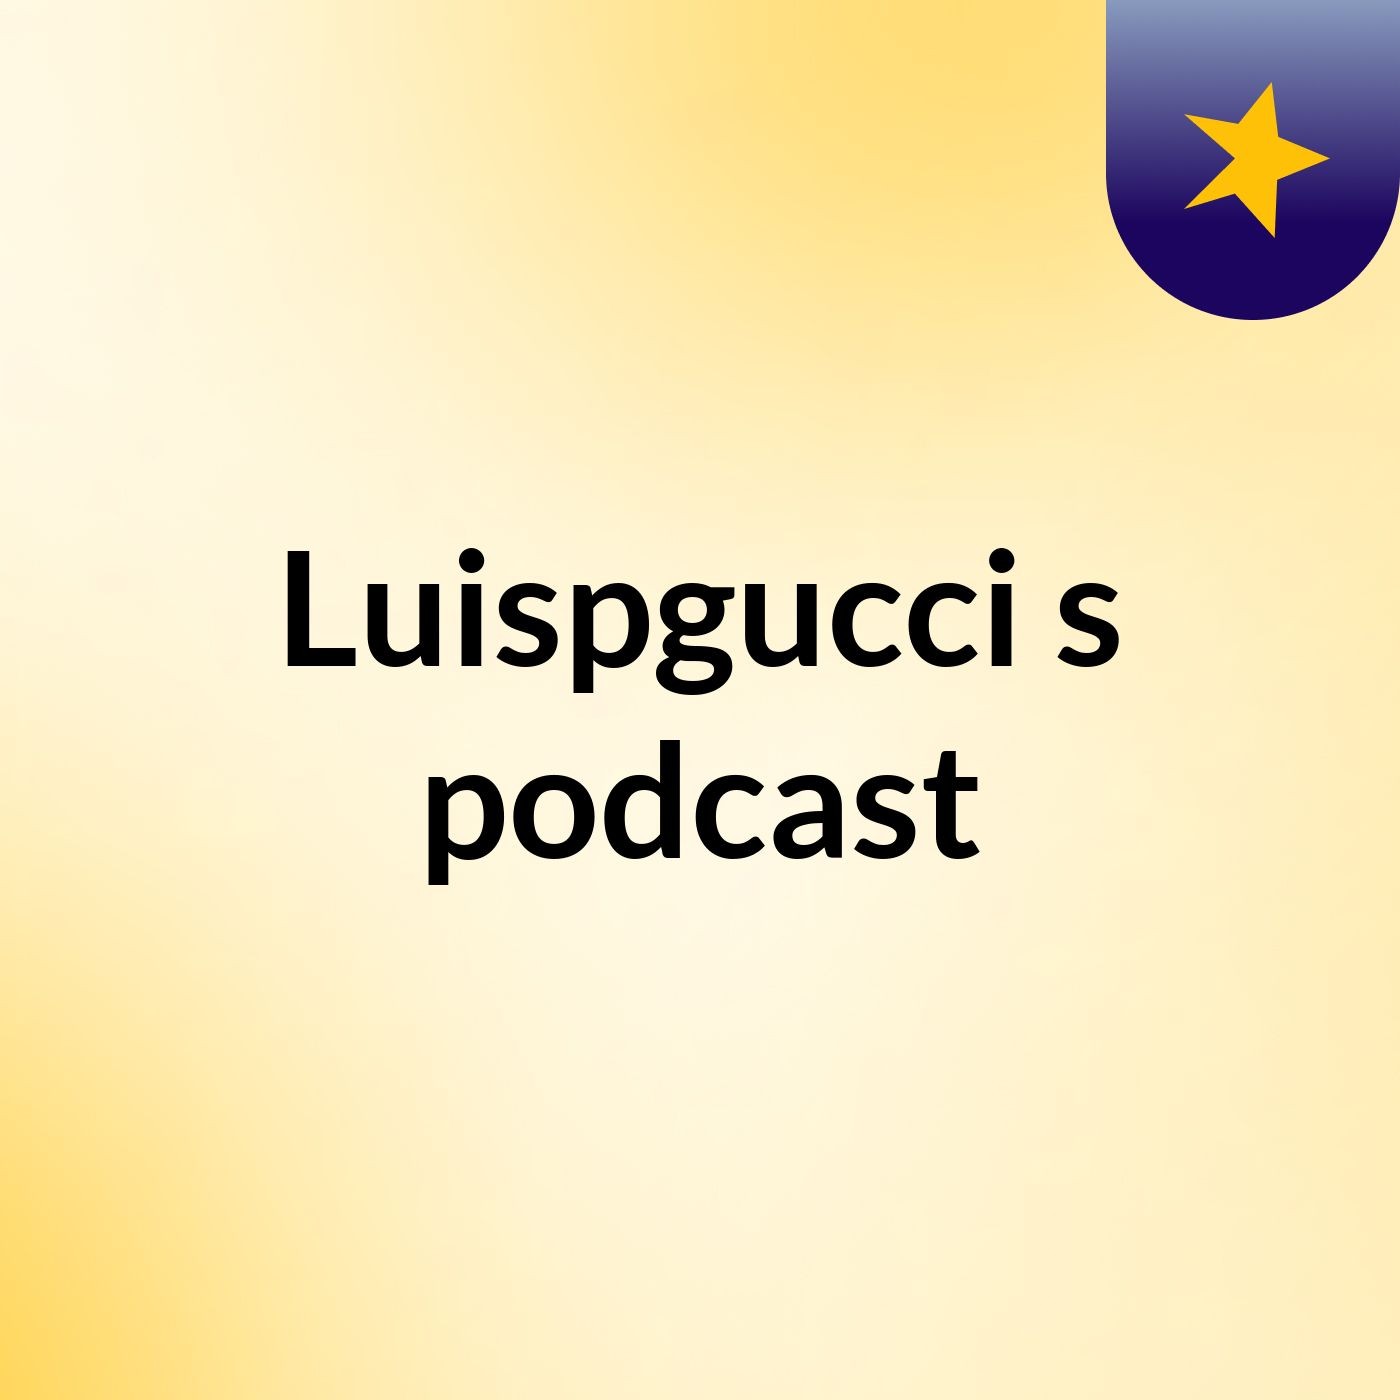 Episode 5 - Luispgucci's podcast